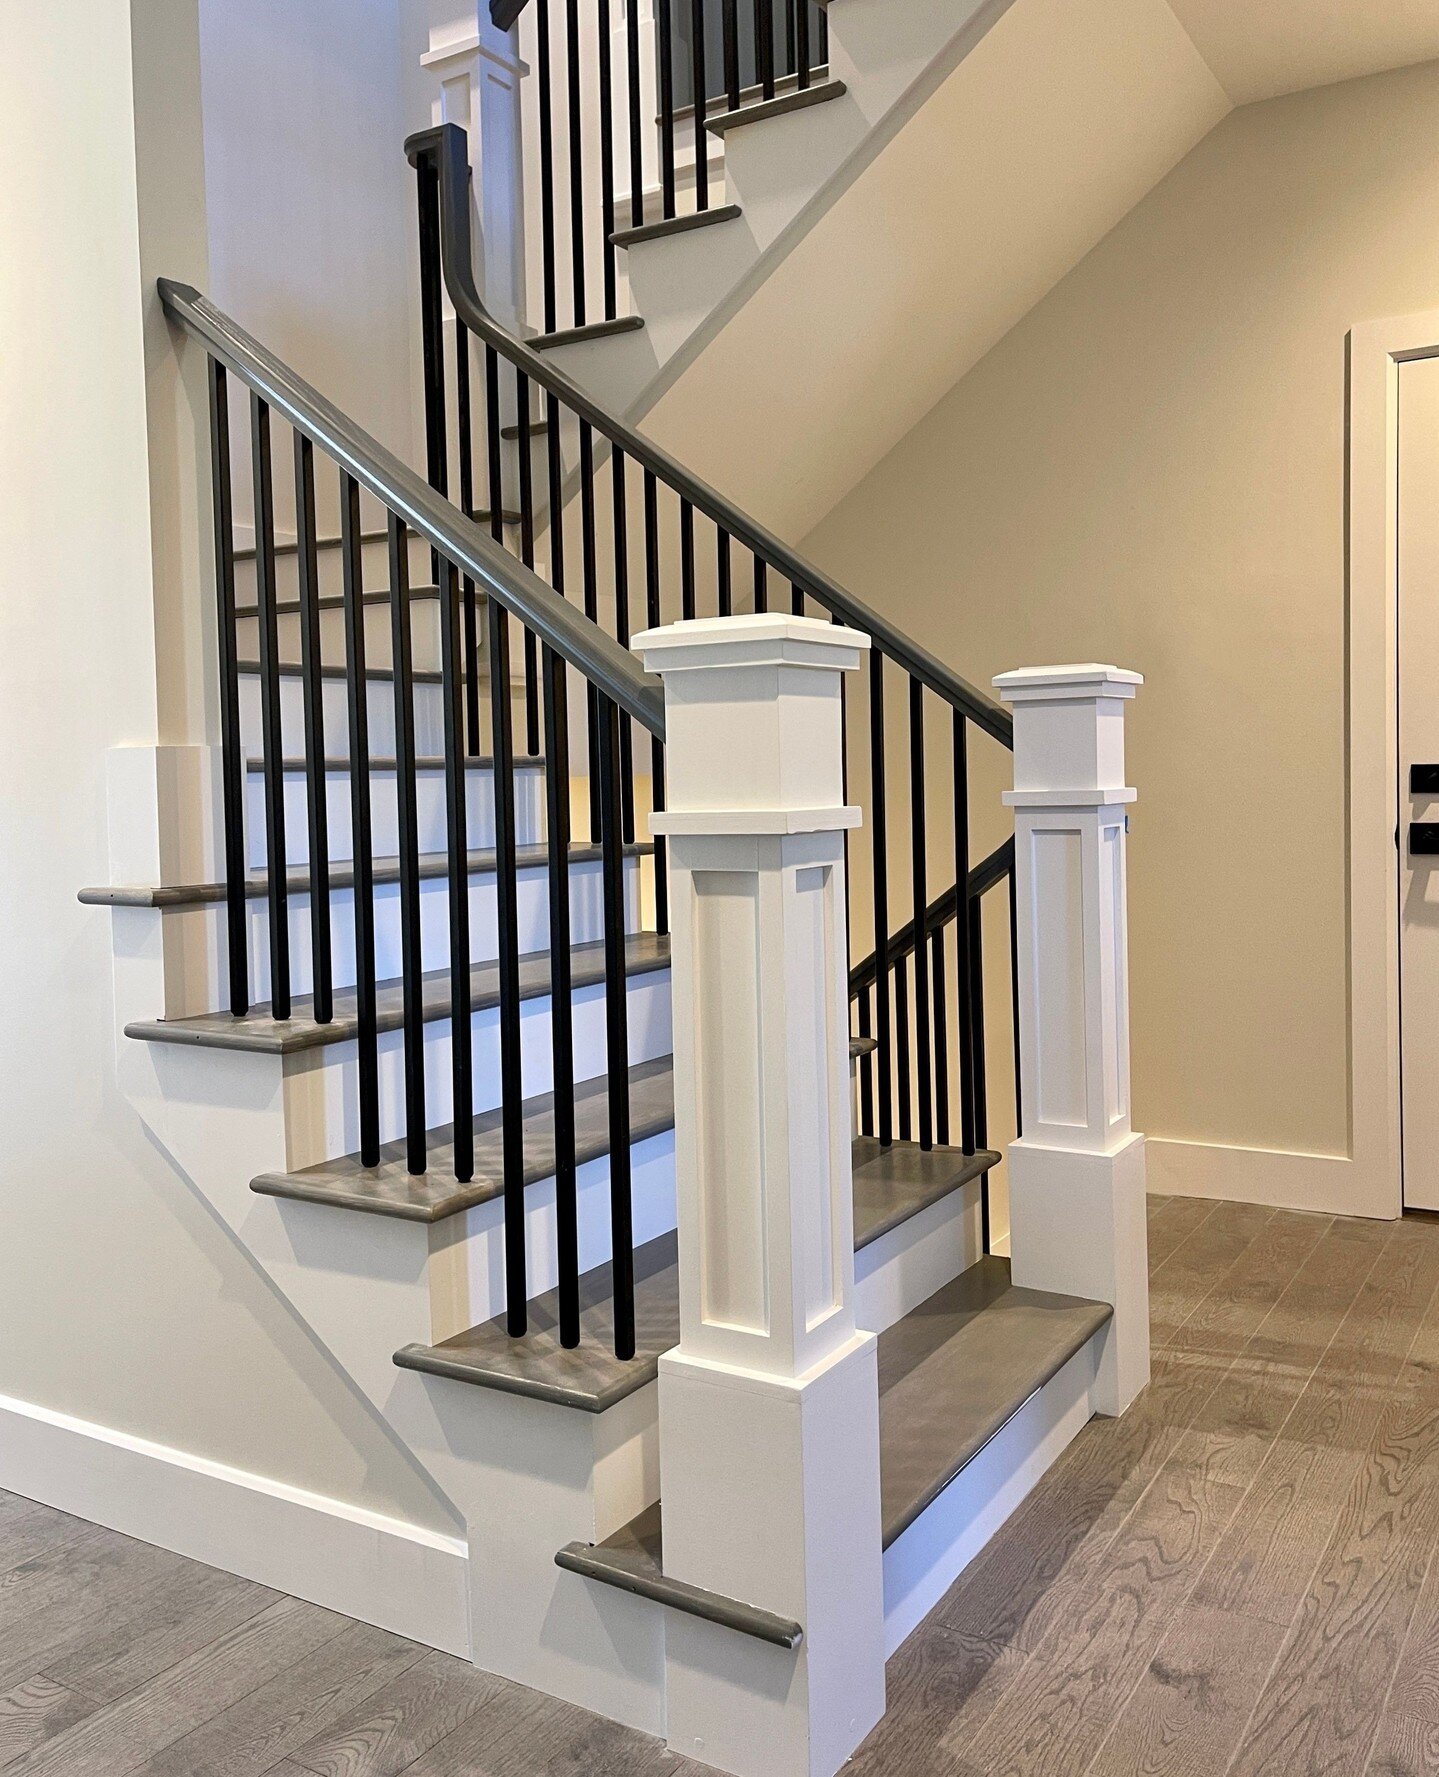 Effortless elegance in our latest staircase design ⁠
.⁠
.⁠
.⁠
#mydesign #StaircaseDesign #CasualChic #ModernFarmhouse #ClassicCharm #TimelessElegance #InteriorInspiration #AmherstNH #BedfordNH #PelhamNH #LexingtonMA #allisonducharmeinteriordesign ⁠